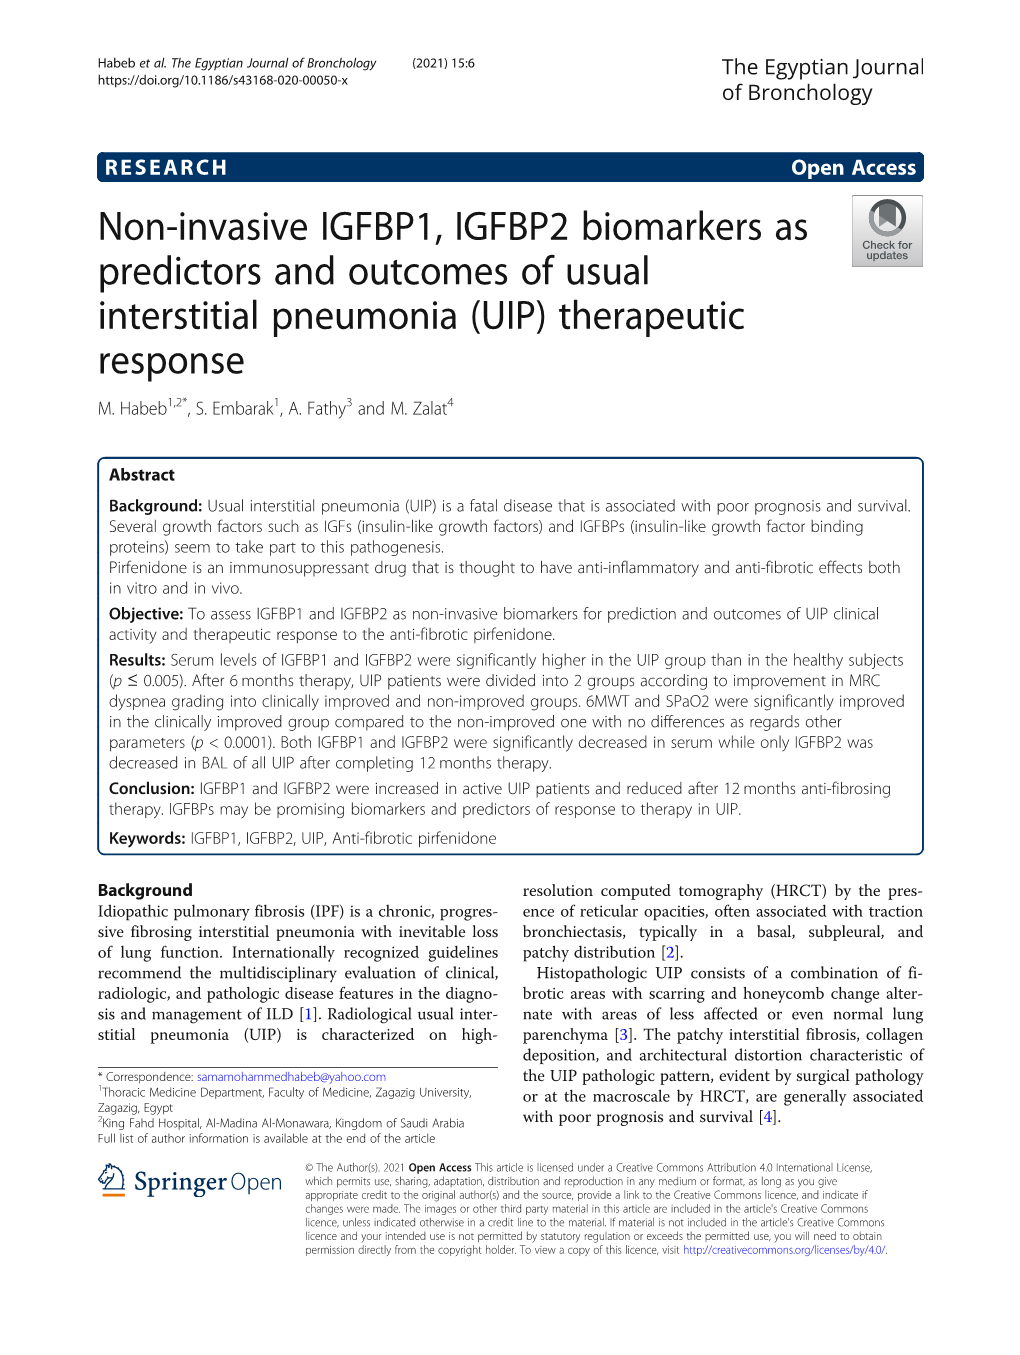 Non-Invasive IGFBP1, IGFBP2 Biomarkers As Predictors and Outcomes of Usual Interstitial Pneumonia (UIP) Therapeutic Response M